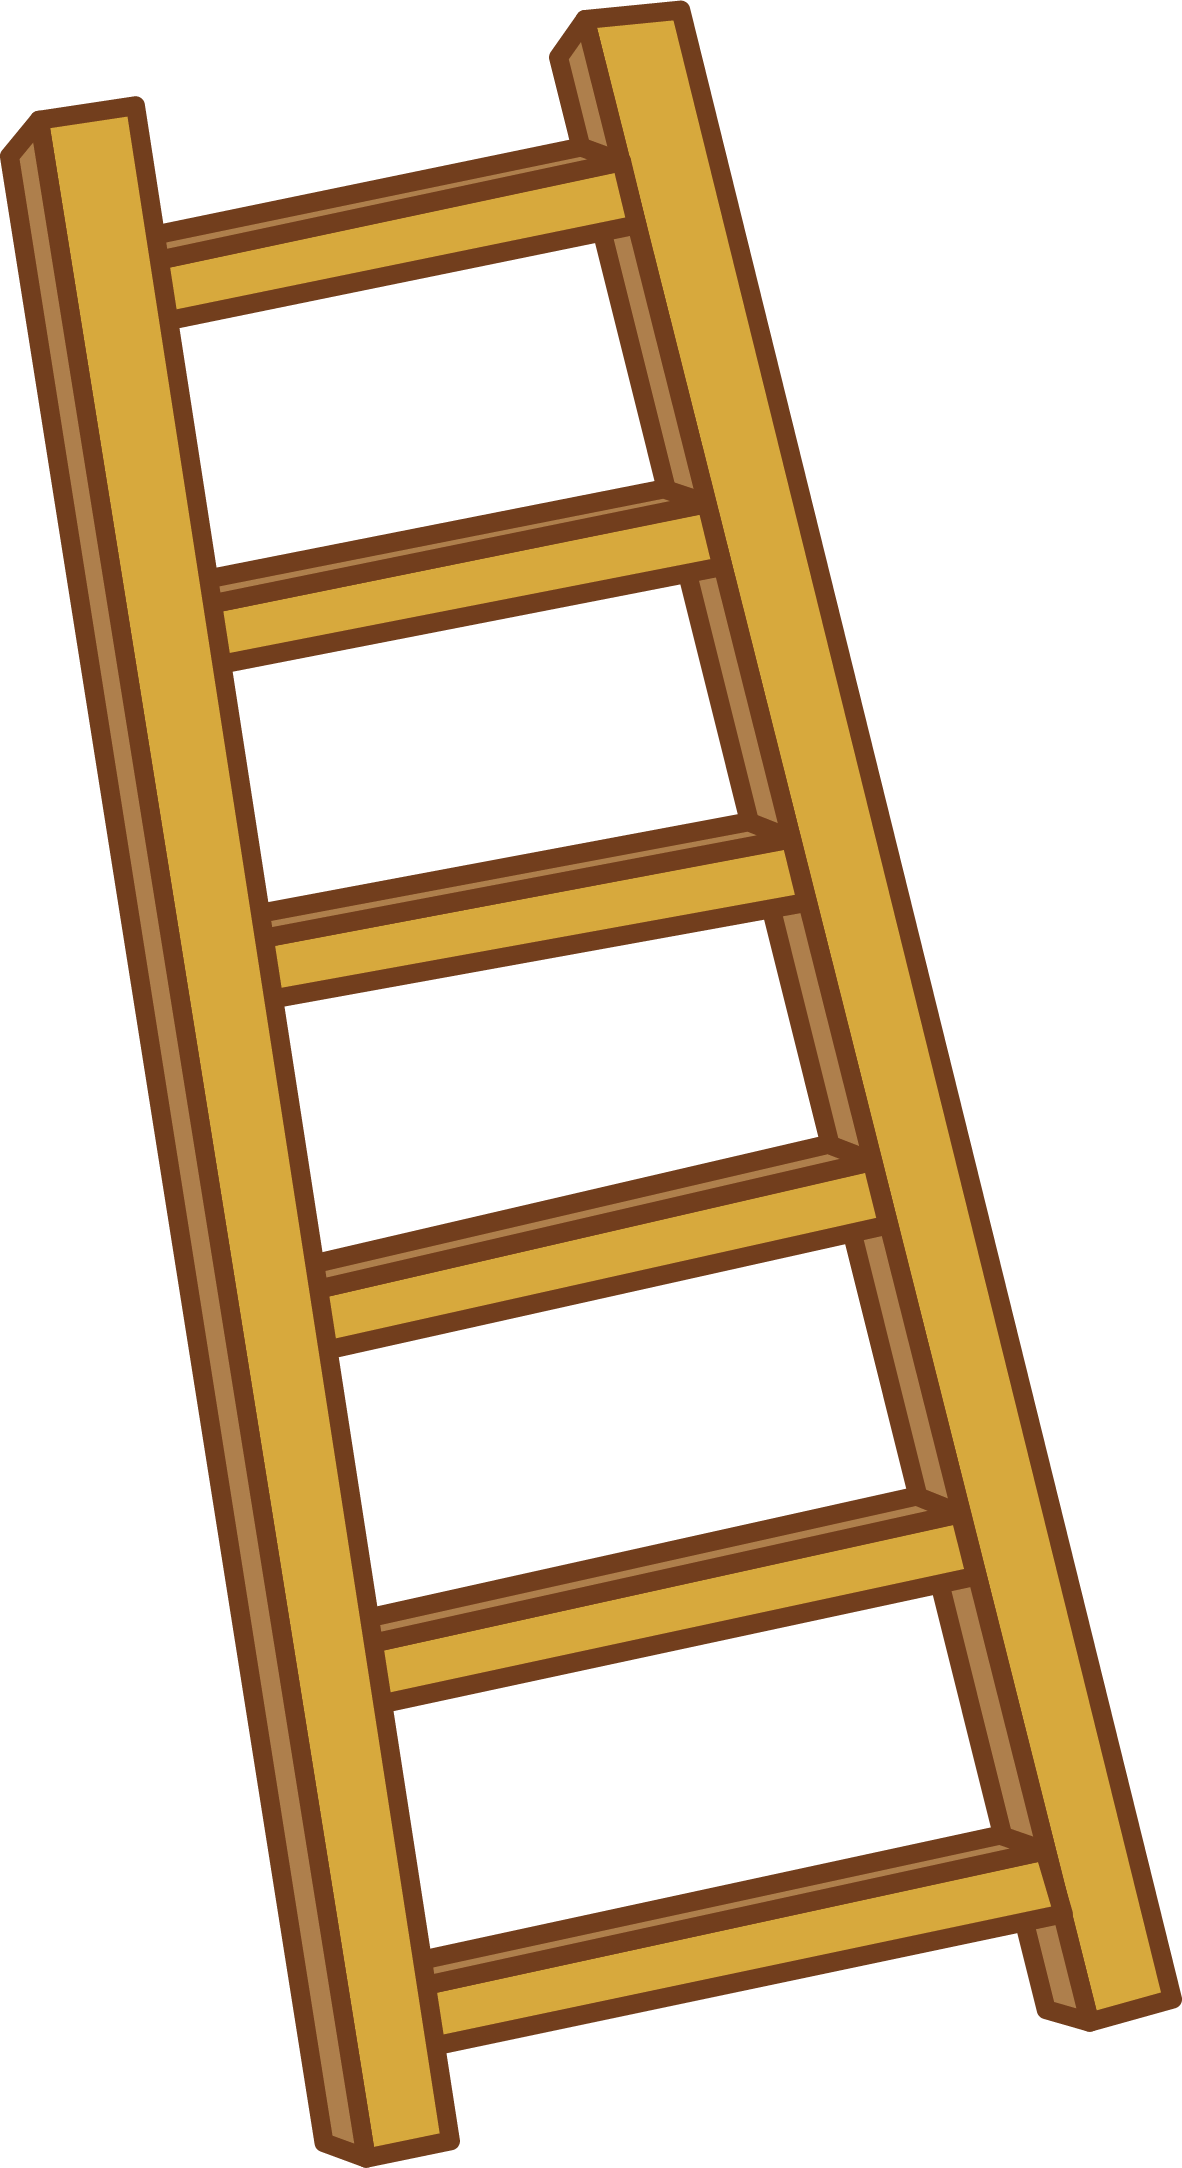 Ladder clipart small ladder, Ladder small ladder Transparent FREE for download on WebStockReview